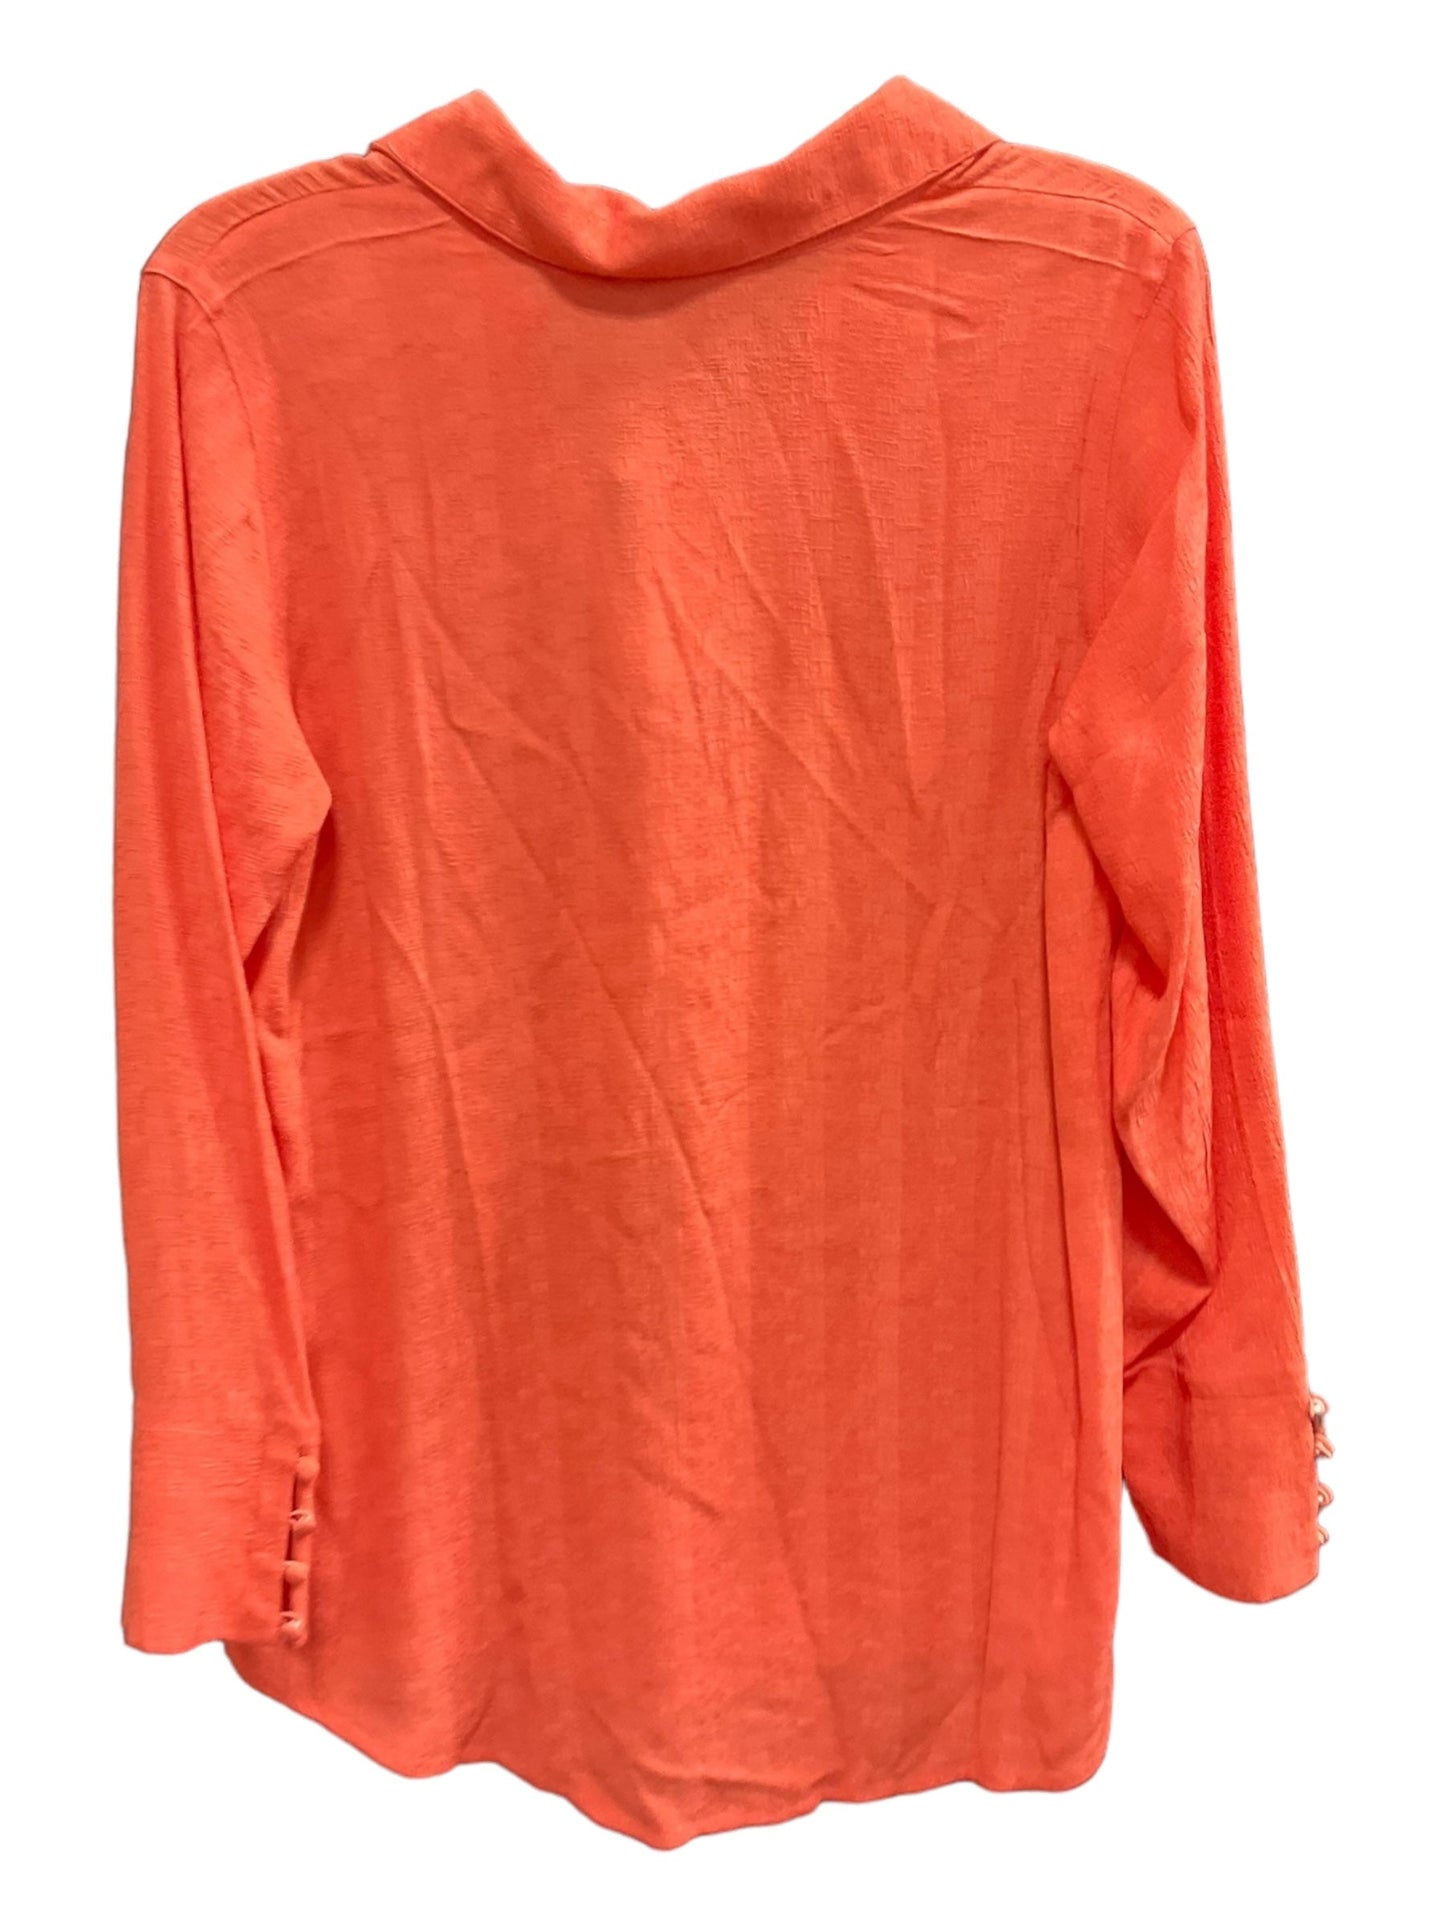 Orange Top Long Sleeve Soft Surroundings, Size S